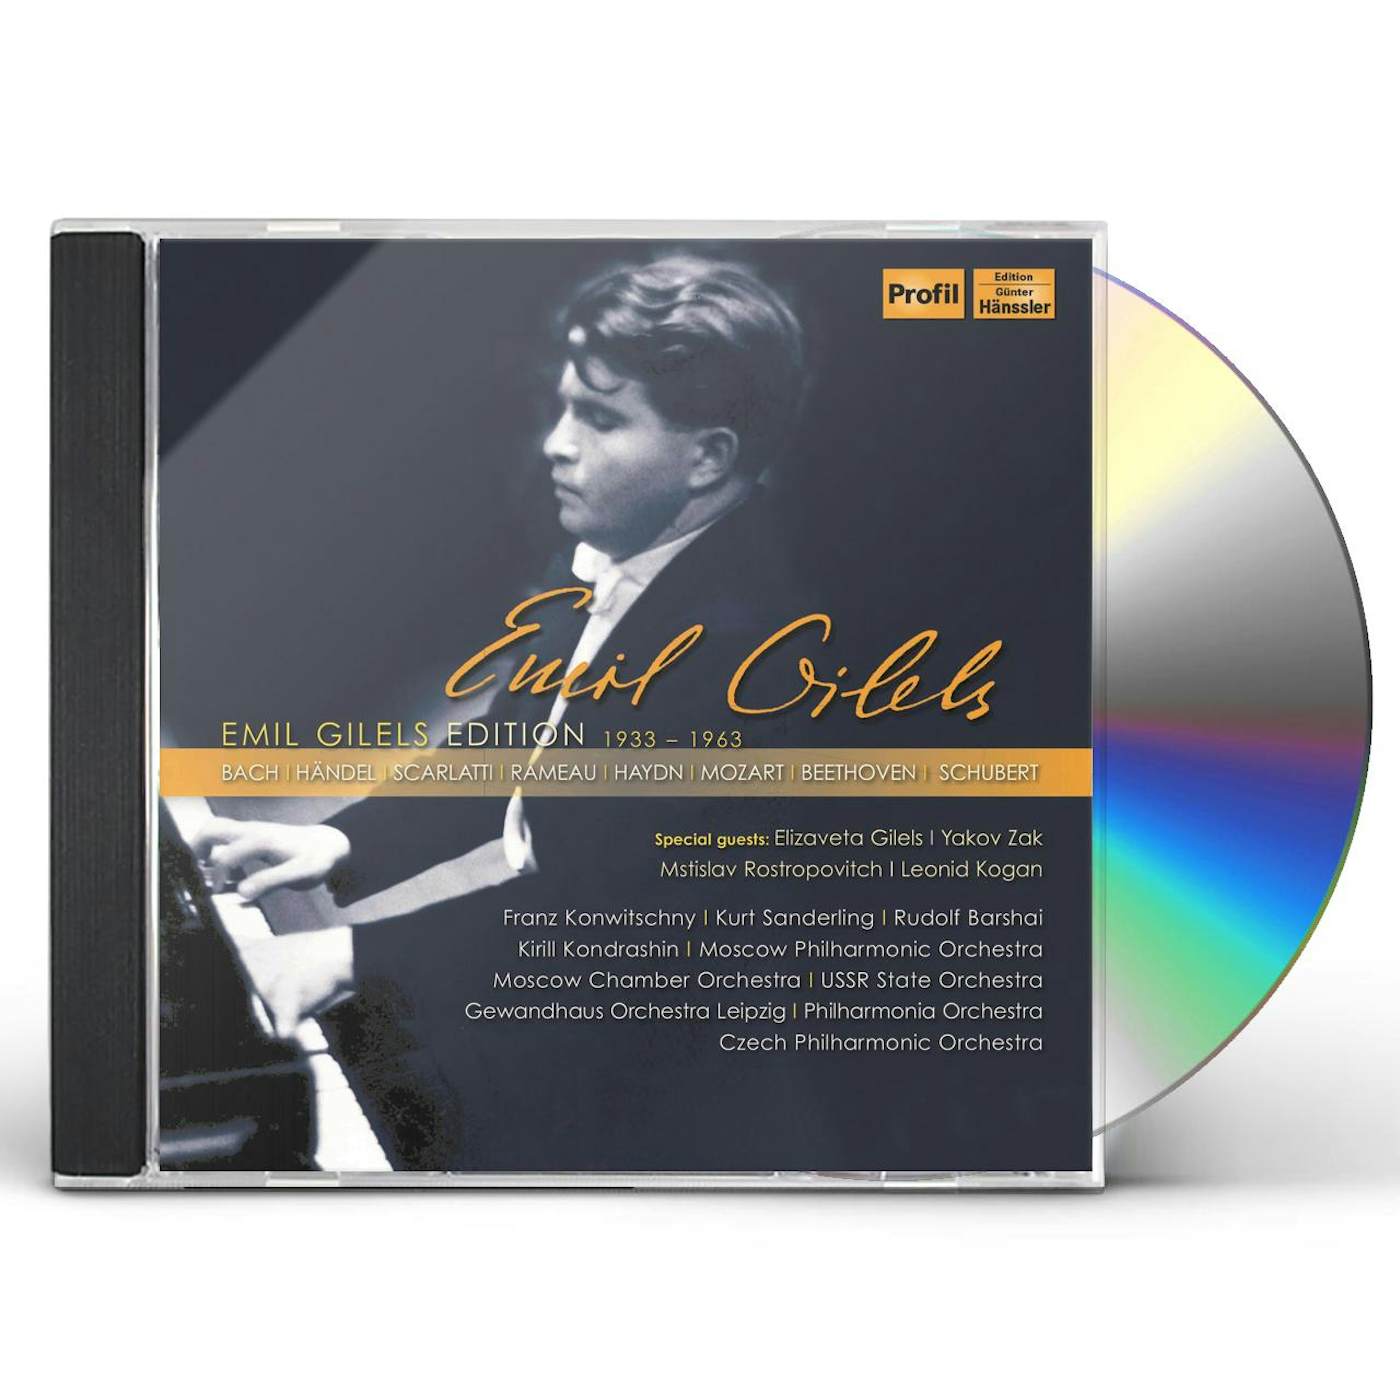 EMIL GILELS EDITION CD